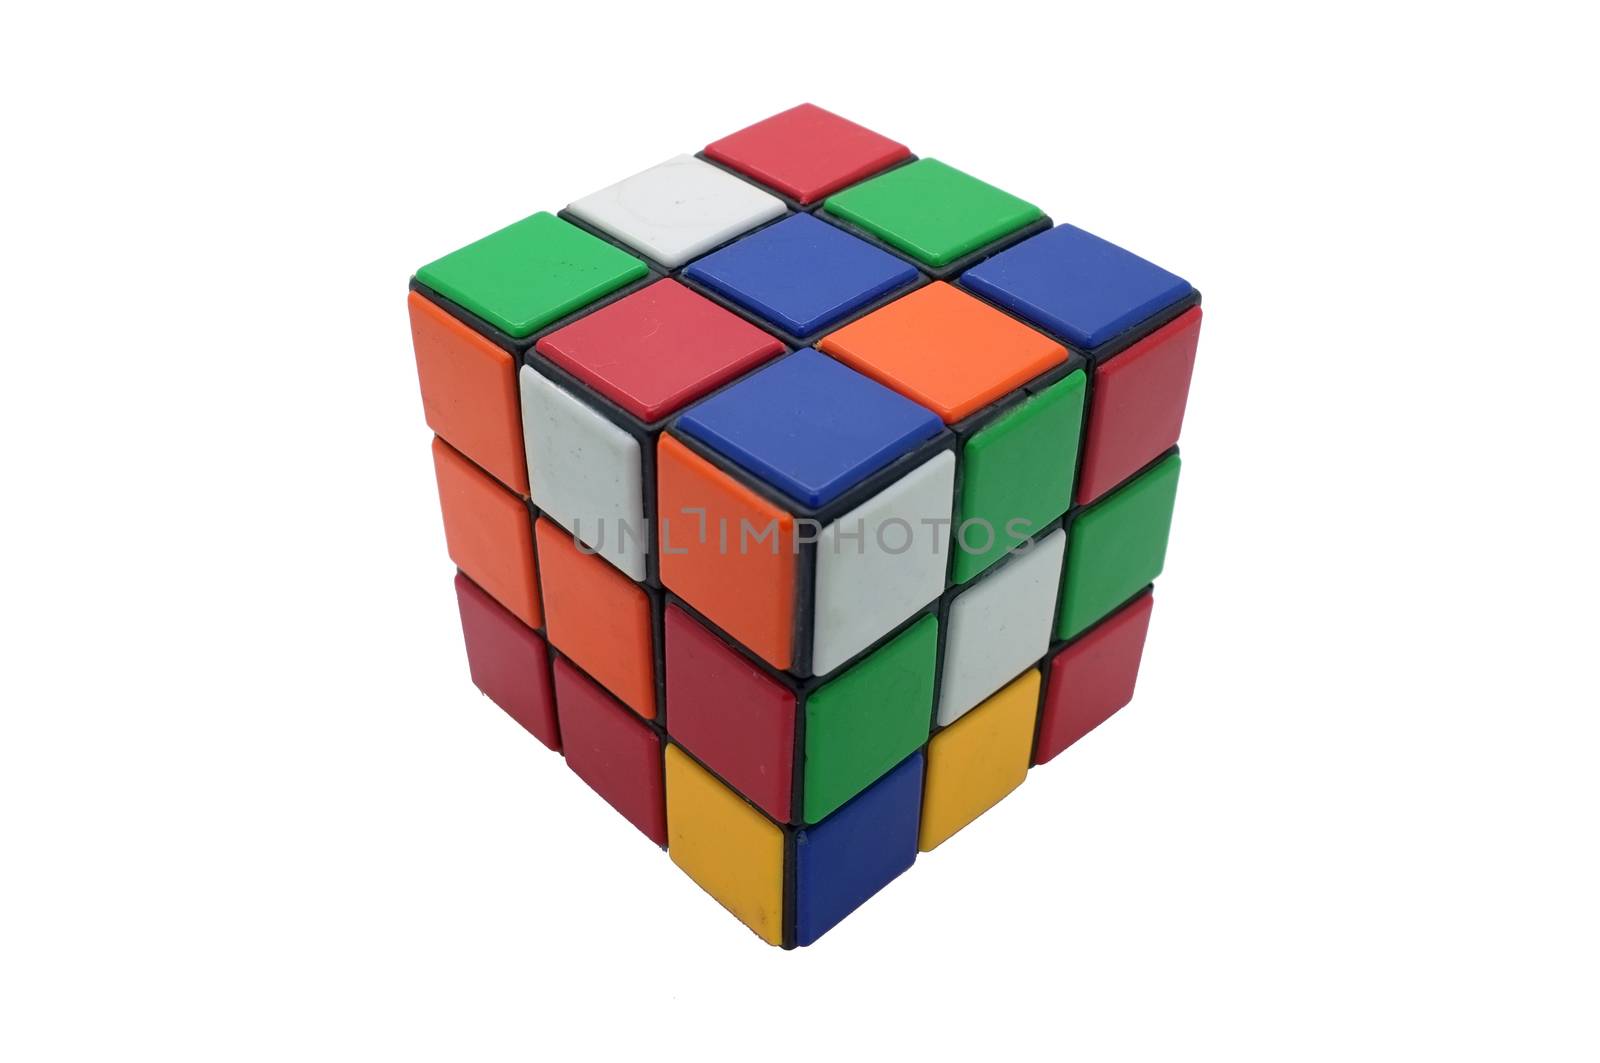 Colorful cubic